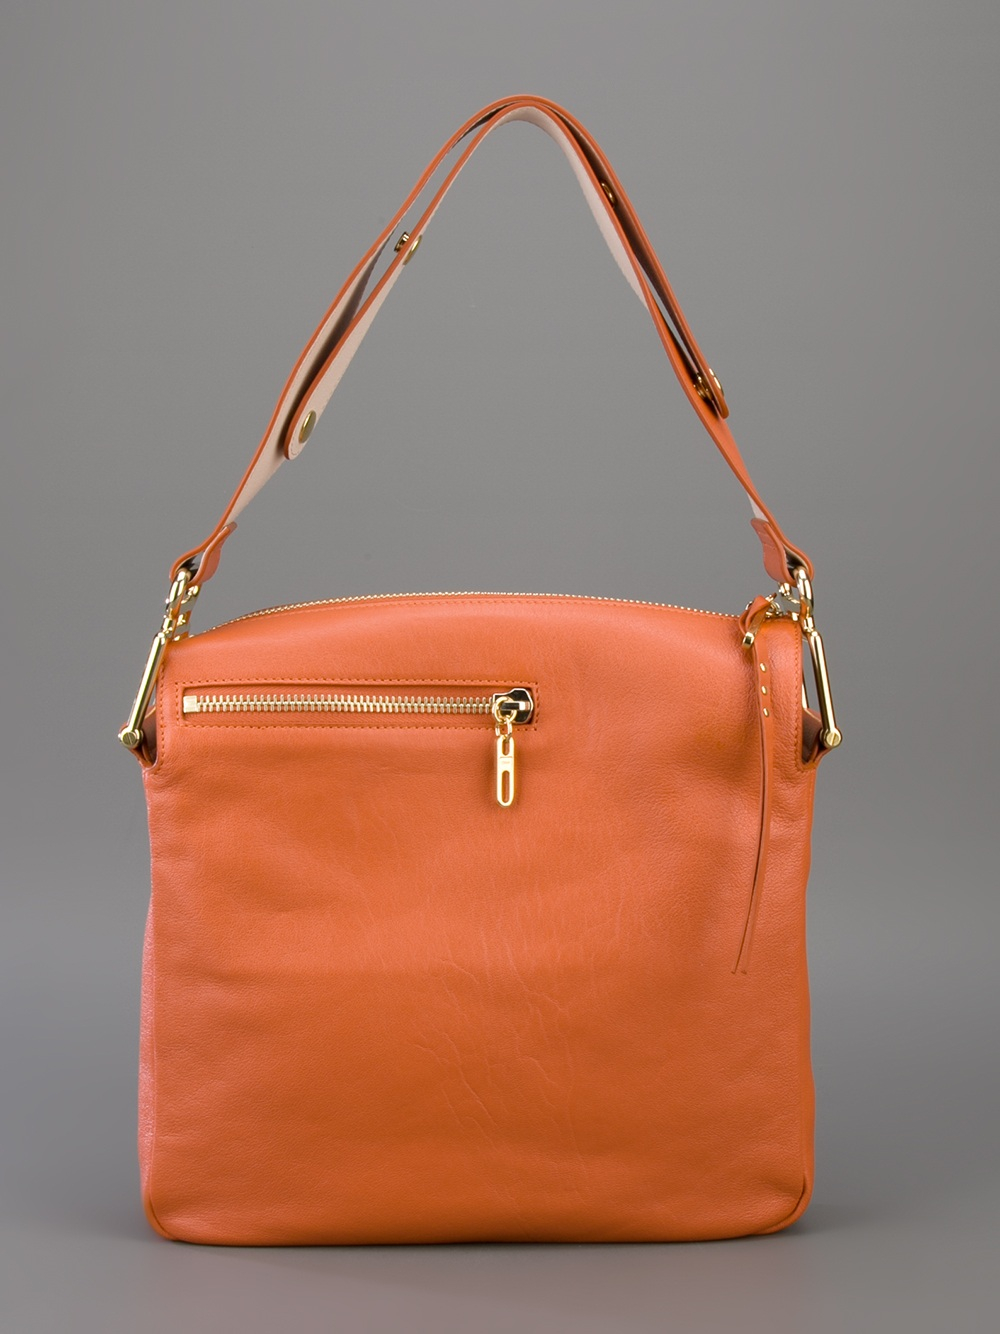 Lyst - Chloé Vanessa Crossbody Bag in Orange